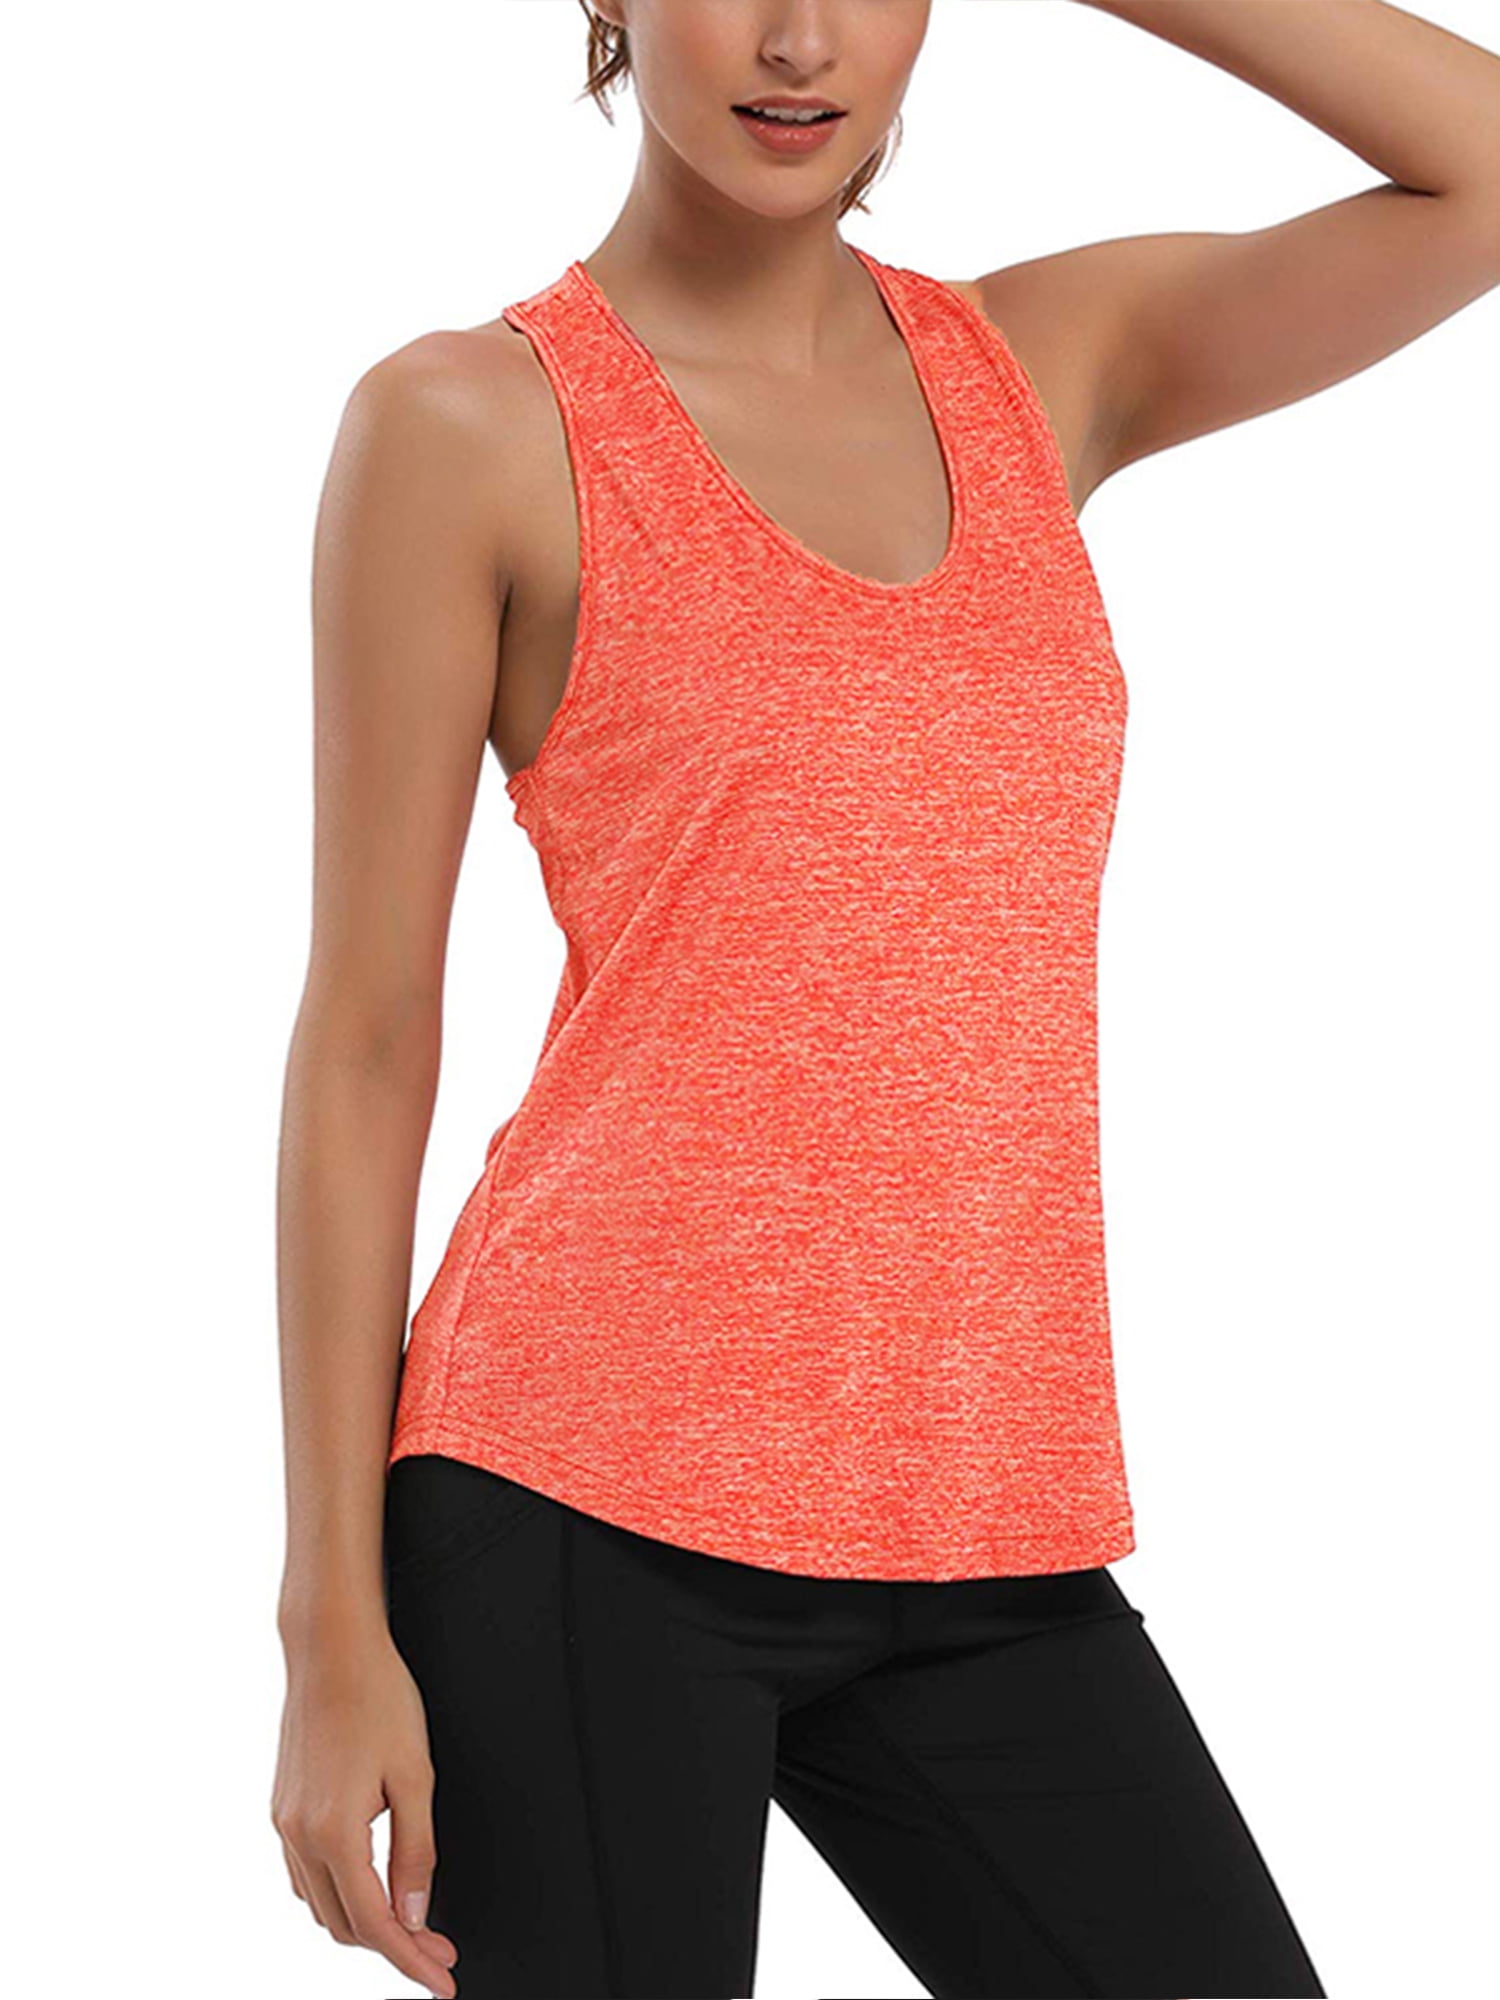 Women Gym Tank Sports Fitness Shirt Yoga Top Workout Sleeveless Cross Back Vest 